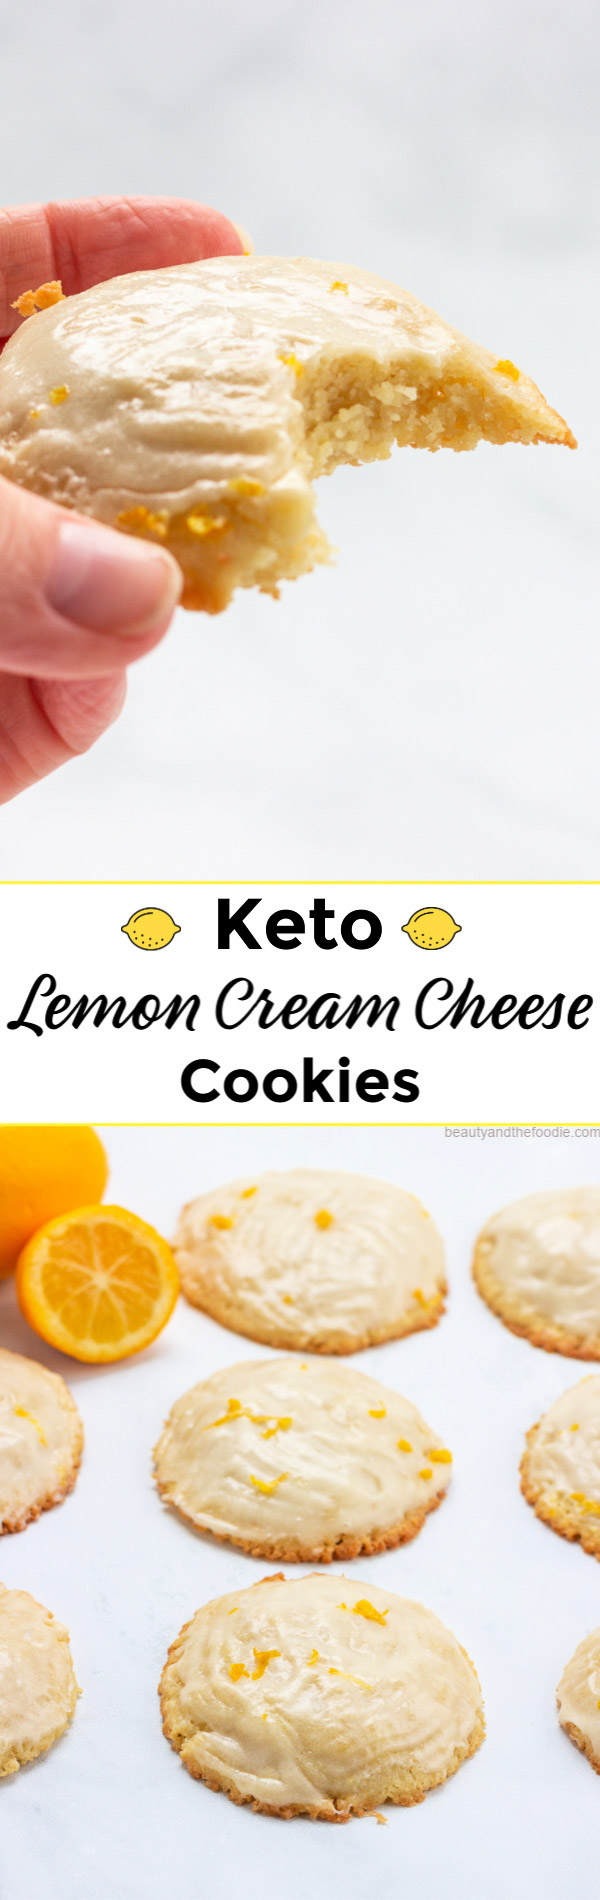 Keto Lemon Cream Cheese Cookies